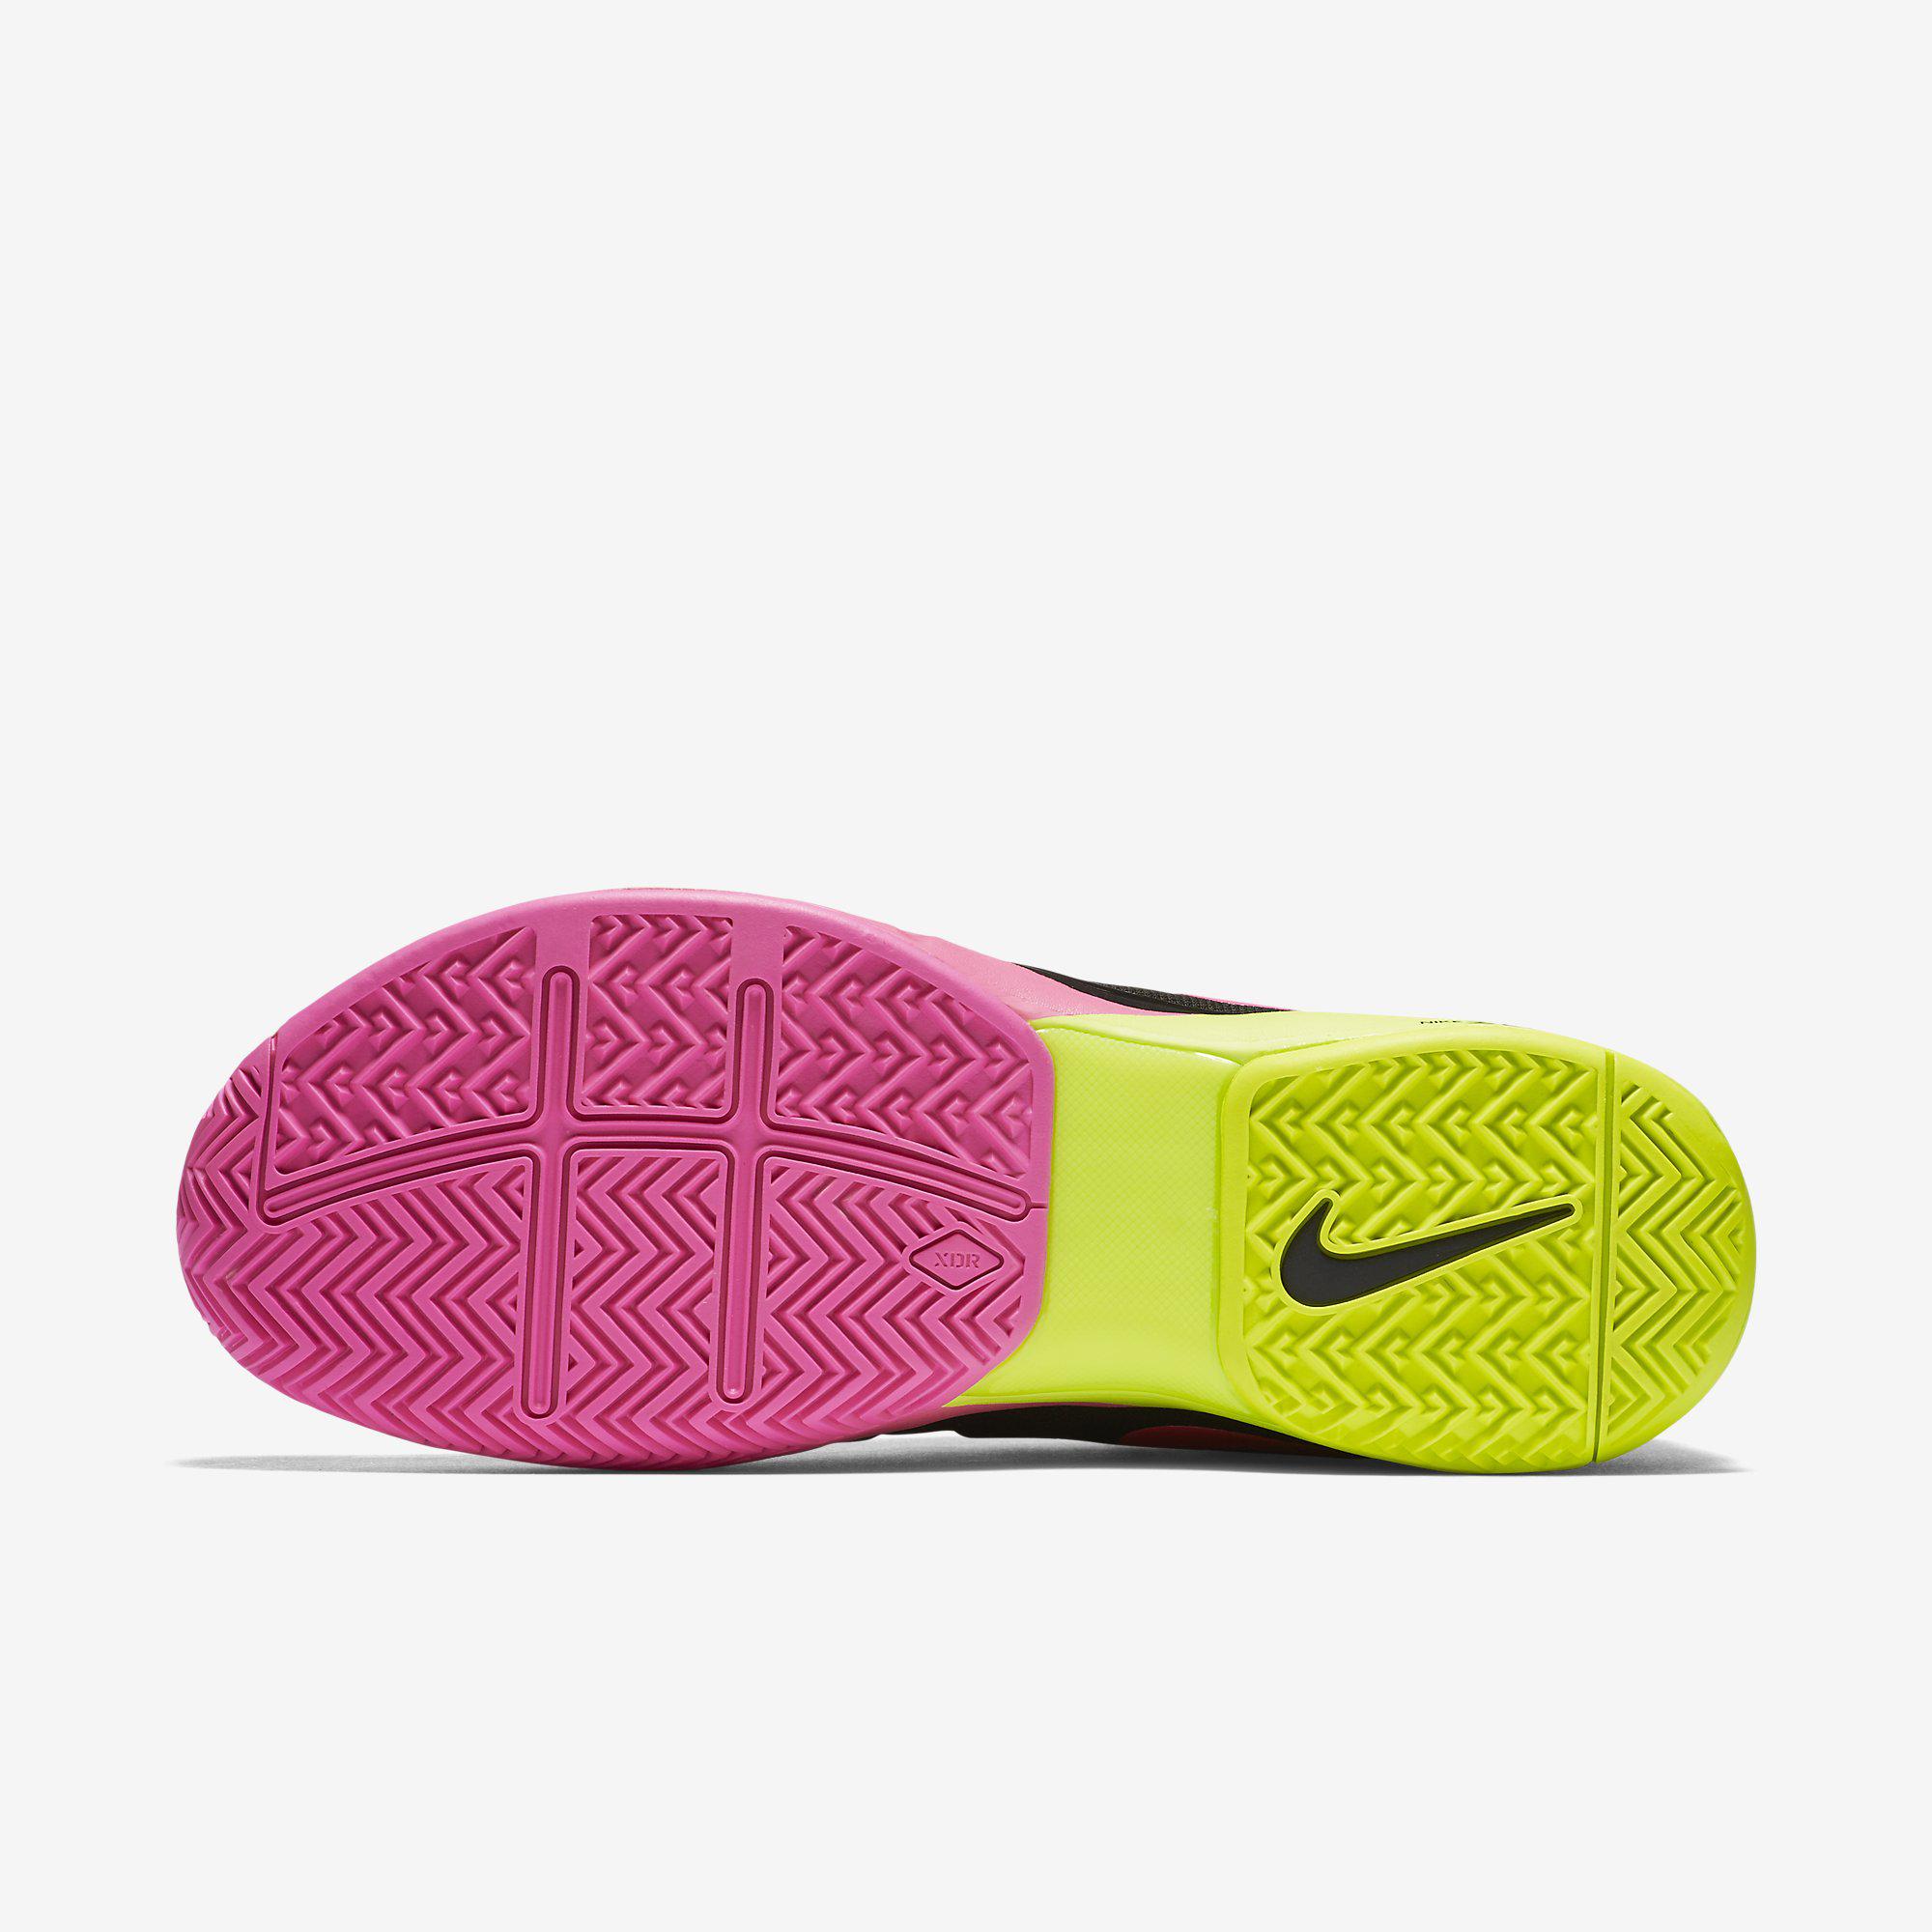 Nike Womens Zoom Vapor 9.5 Tennis Shoes - Black/Volt/Pink - Tennisnuts.com